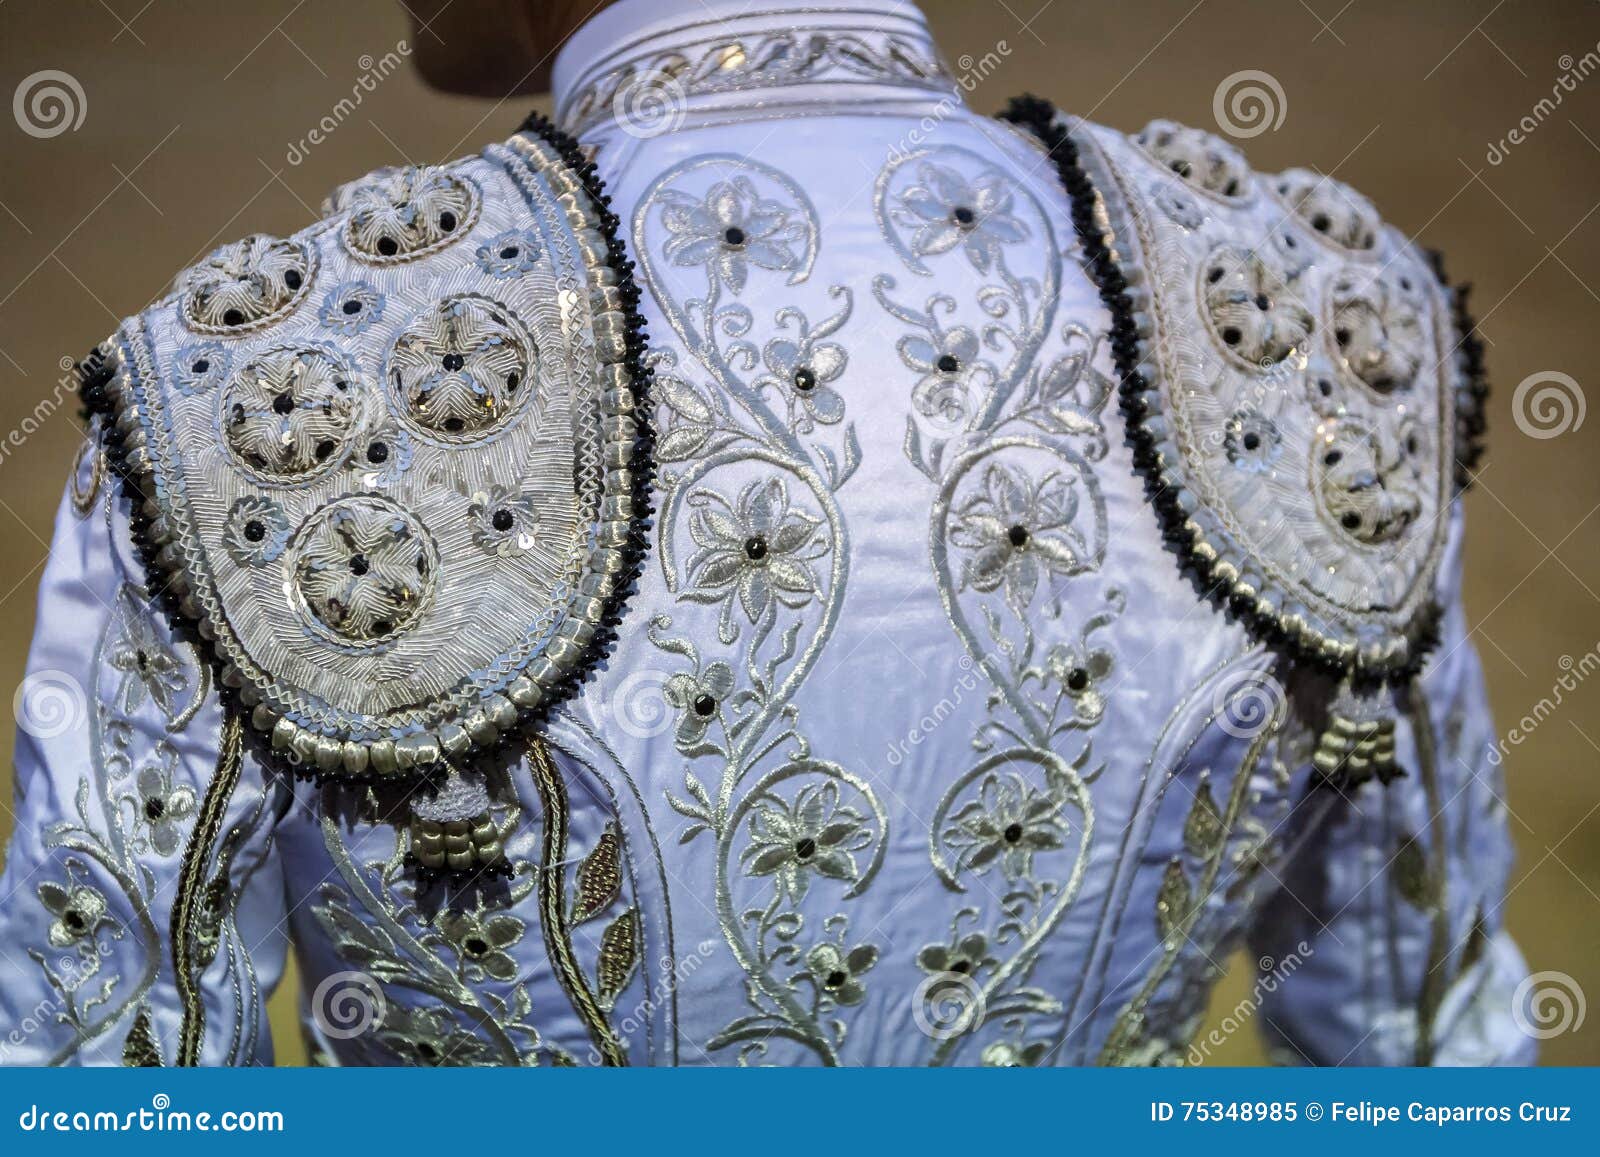 detail of the traje de luces or bullfighter dress